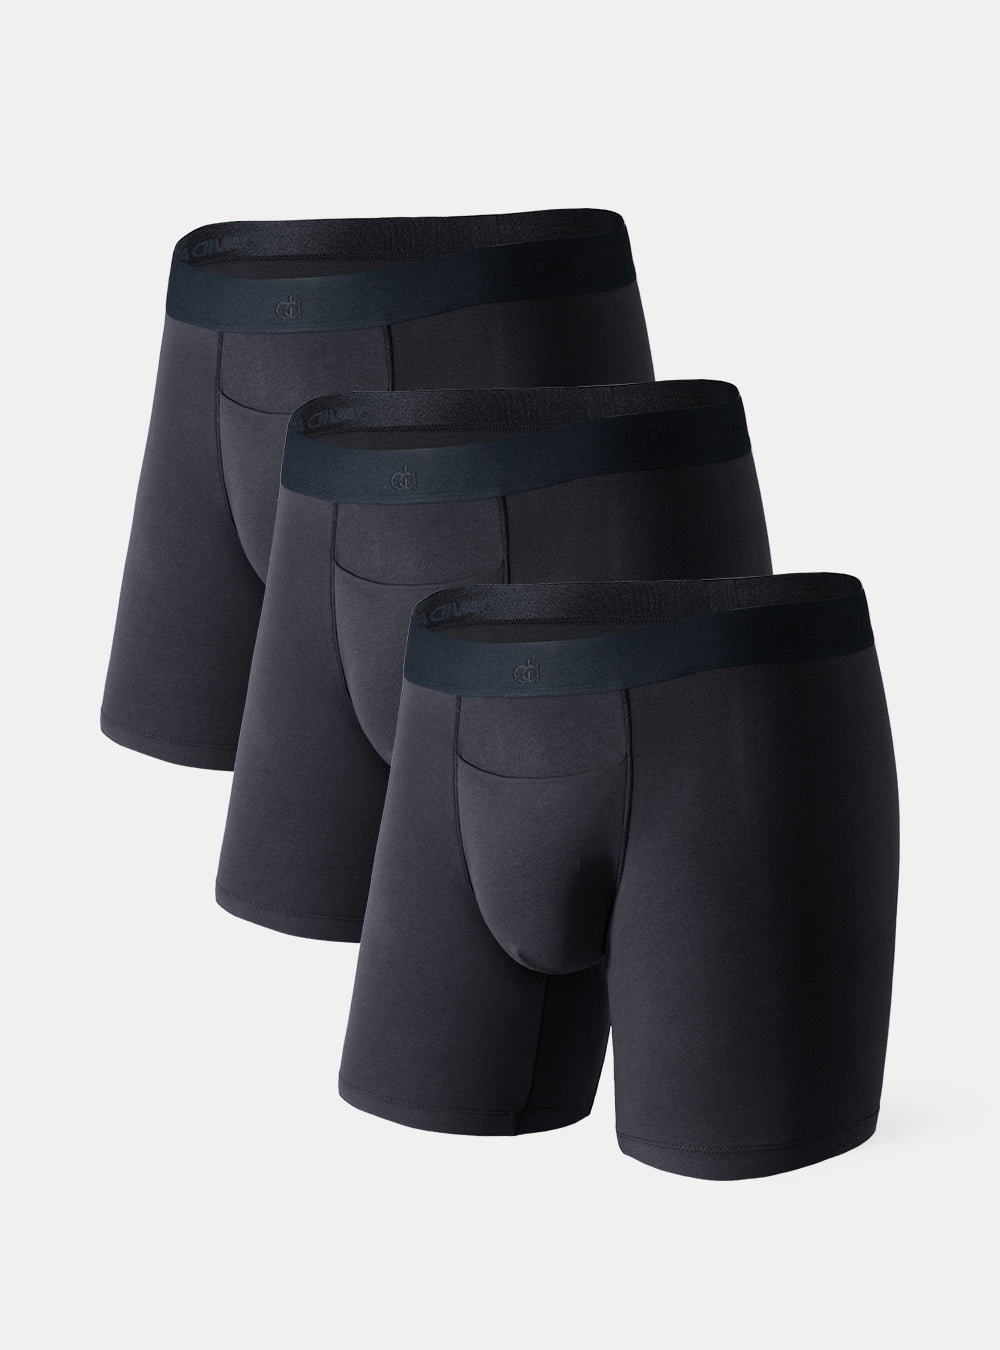 Buy BASIC Underwear Briefs, 100% Pure Cotton Breathable & Super Soft